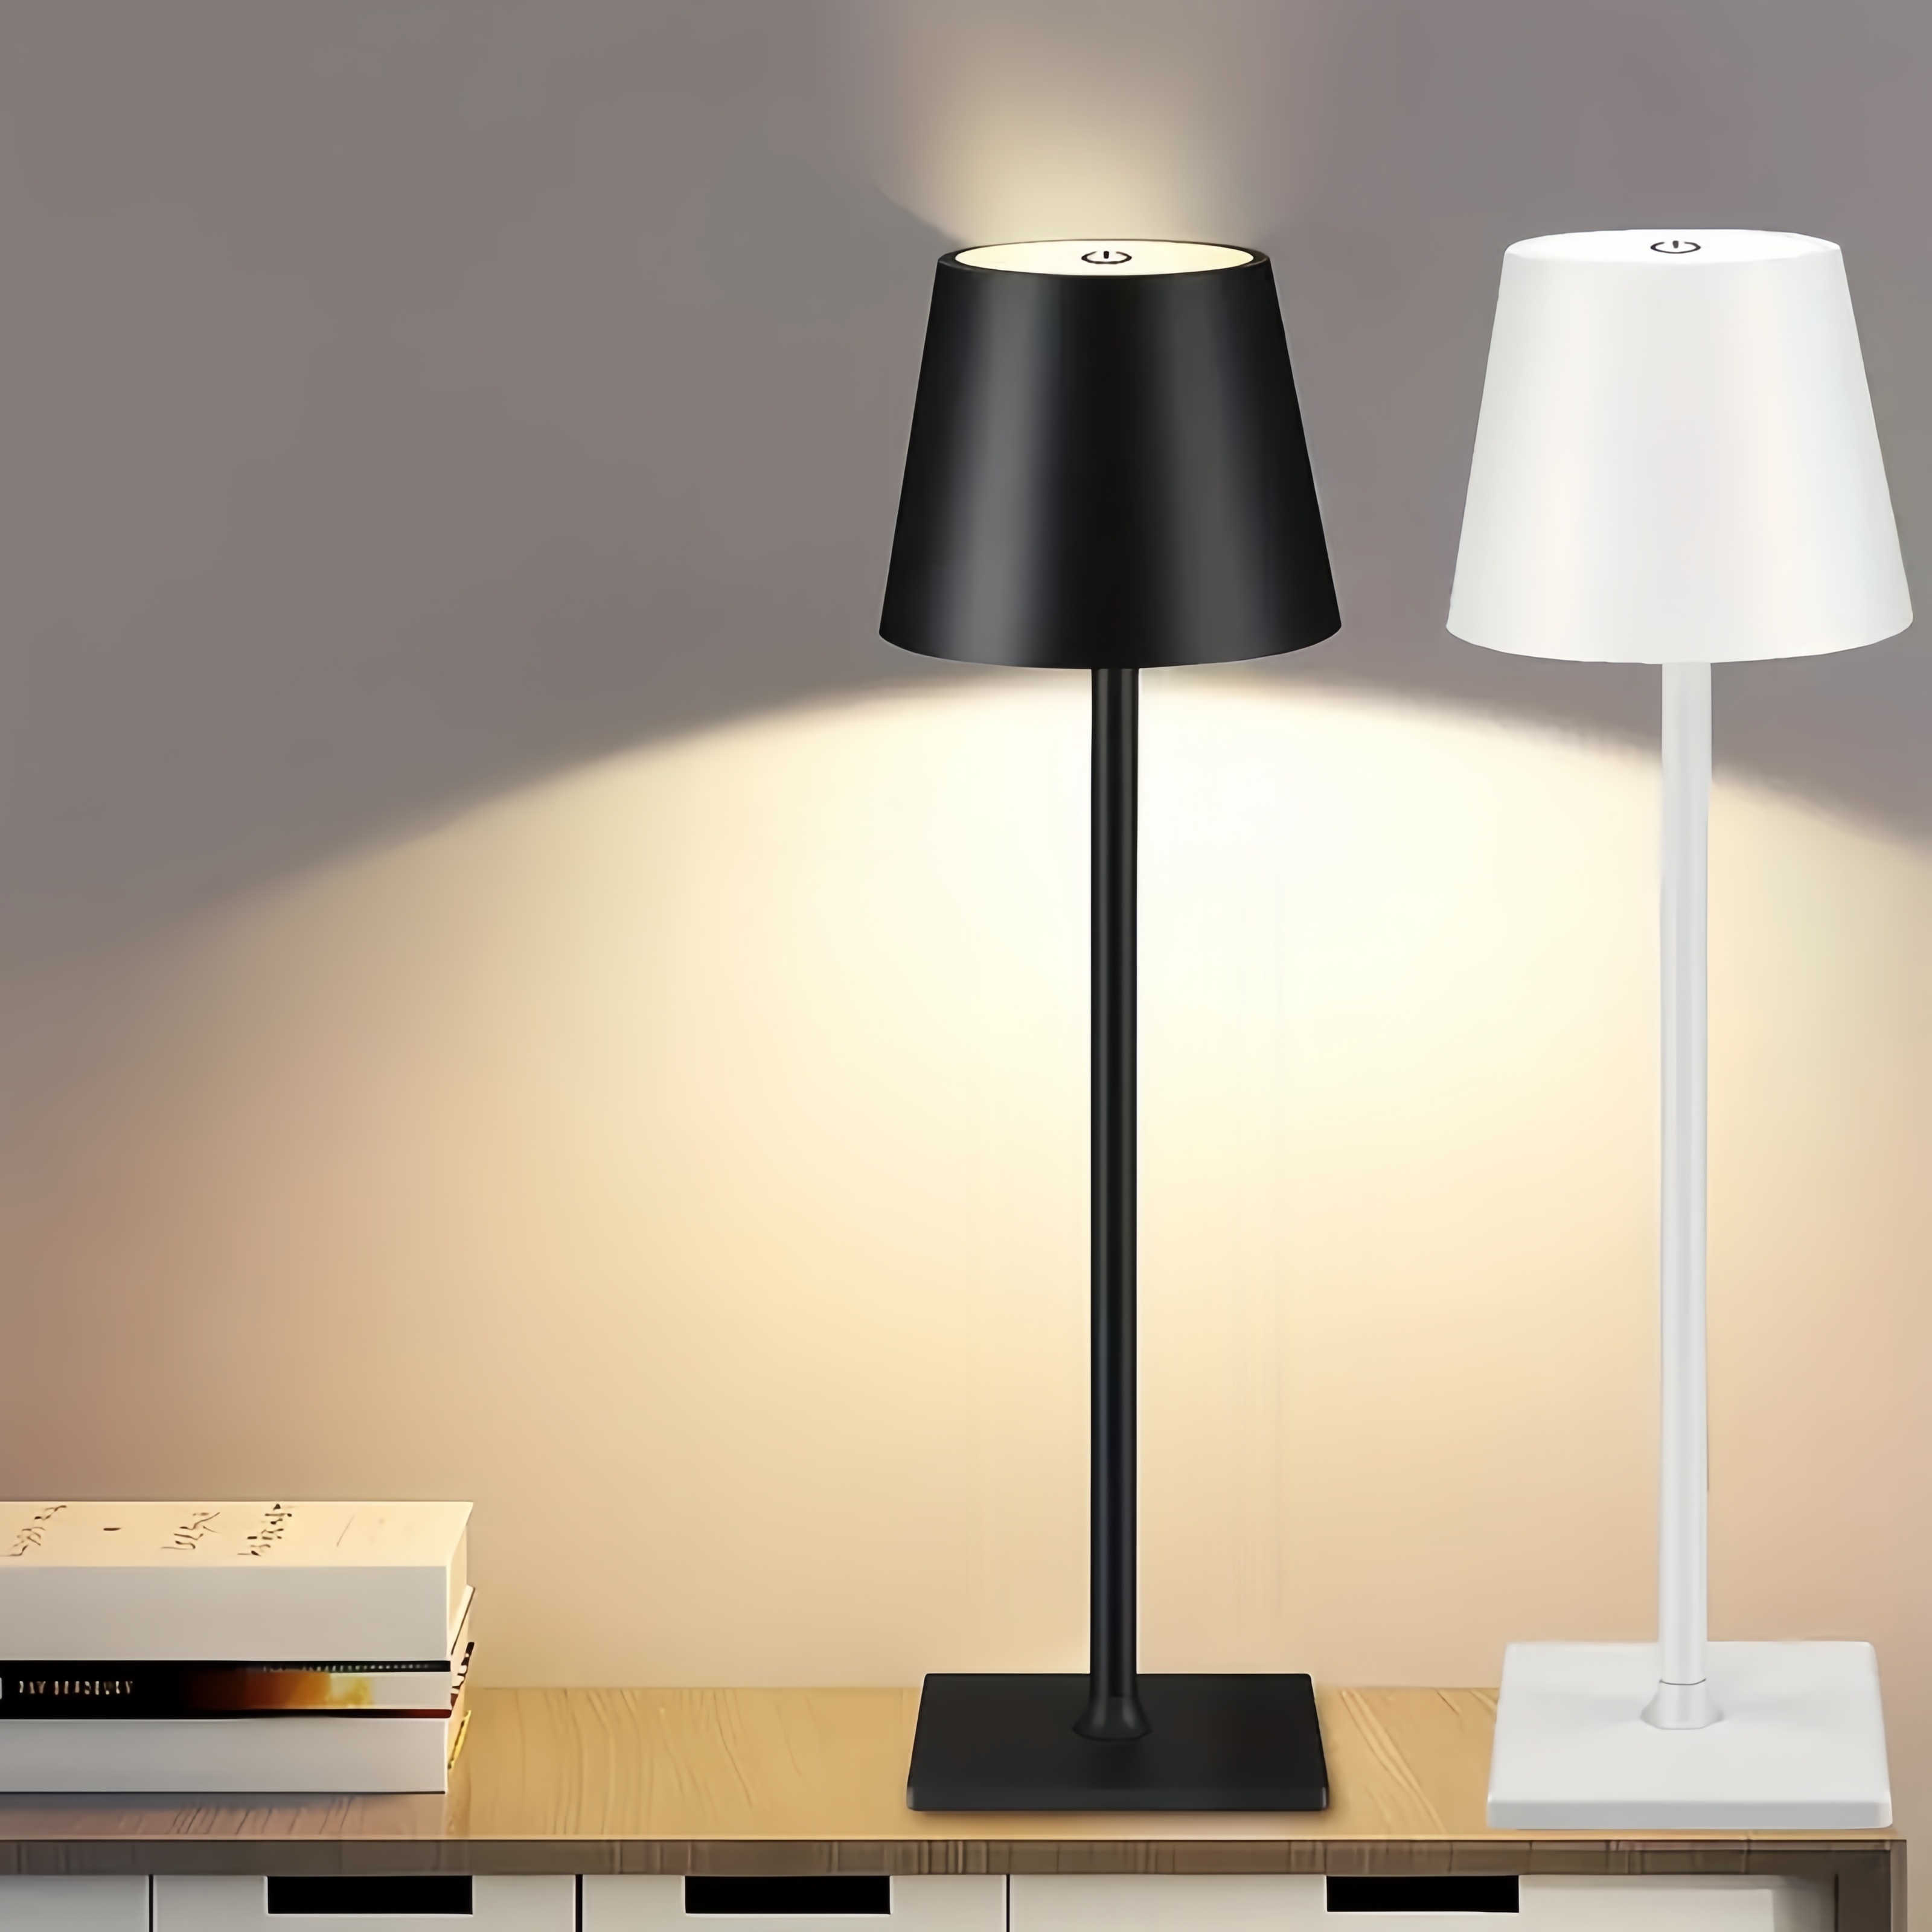  One Fire Lámpara inalámbrica, lámpara recargable de 10 brillo y  lámpara táctil RGB de 16 colores, mini lámpara portátil pequeña, lámpara  LED inalámbrica para dormitorio, lectura, oficina en casa, : Todo